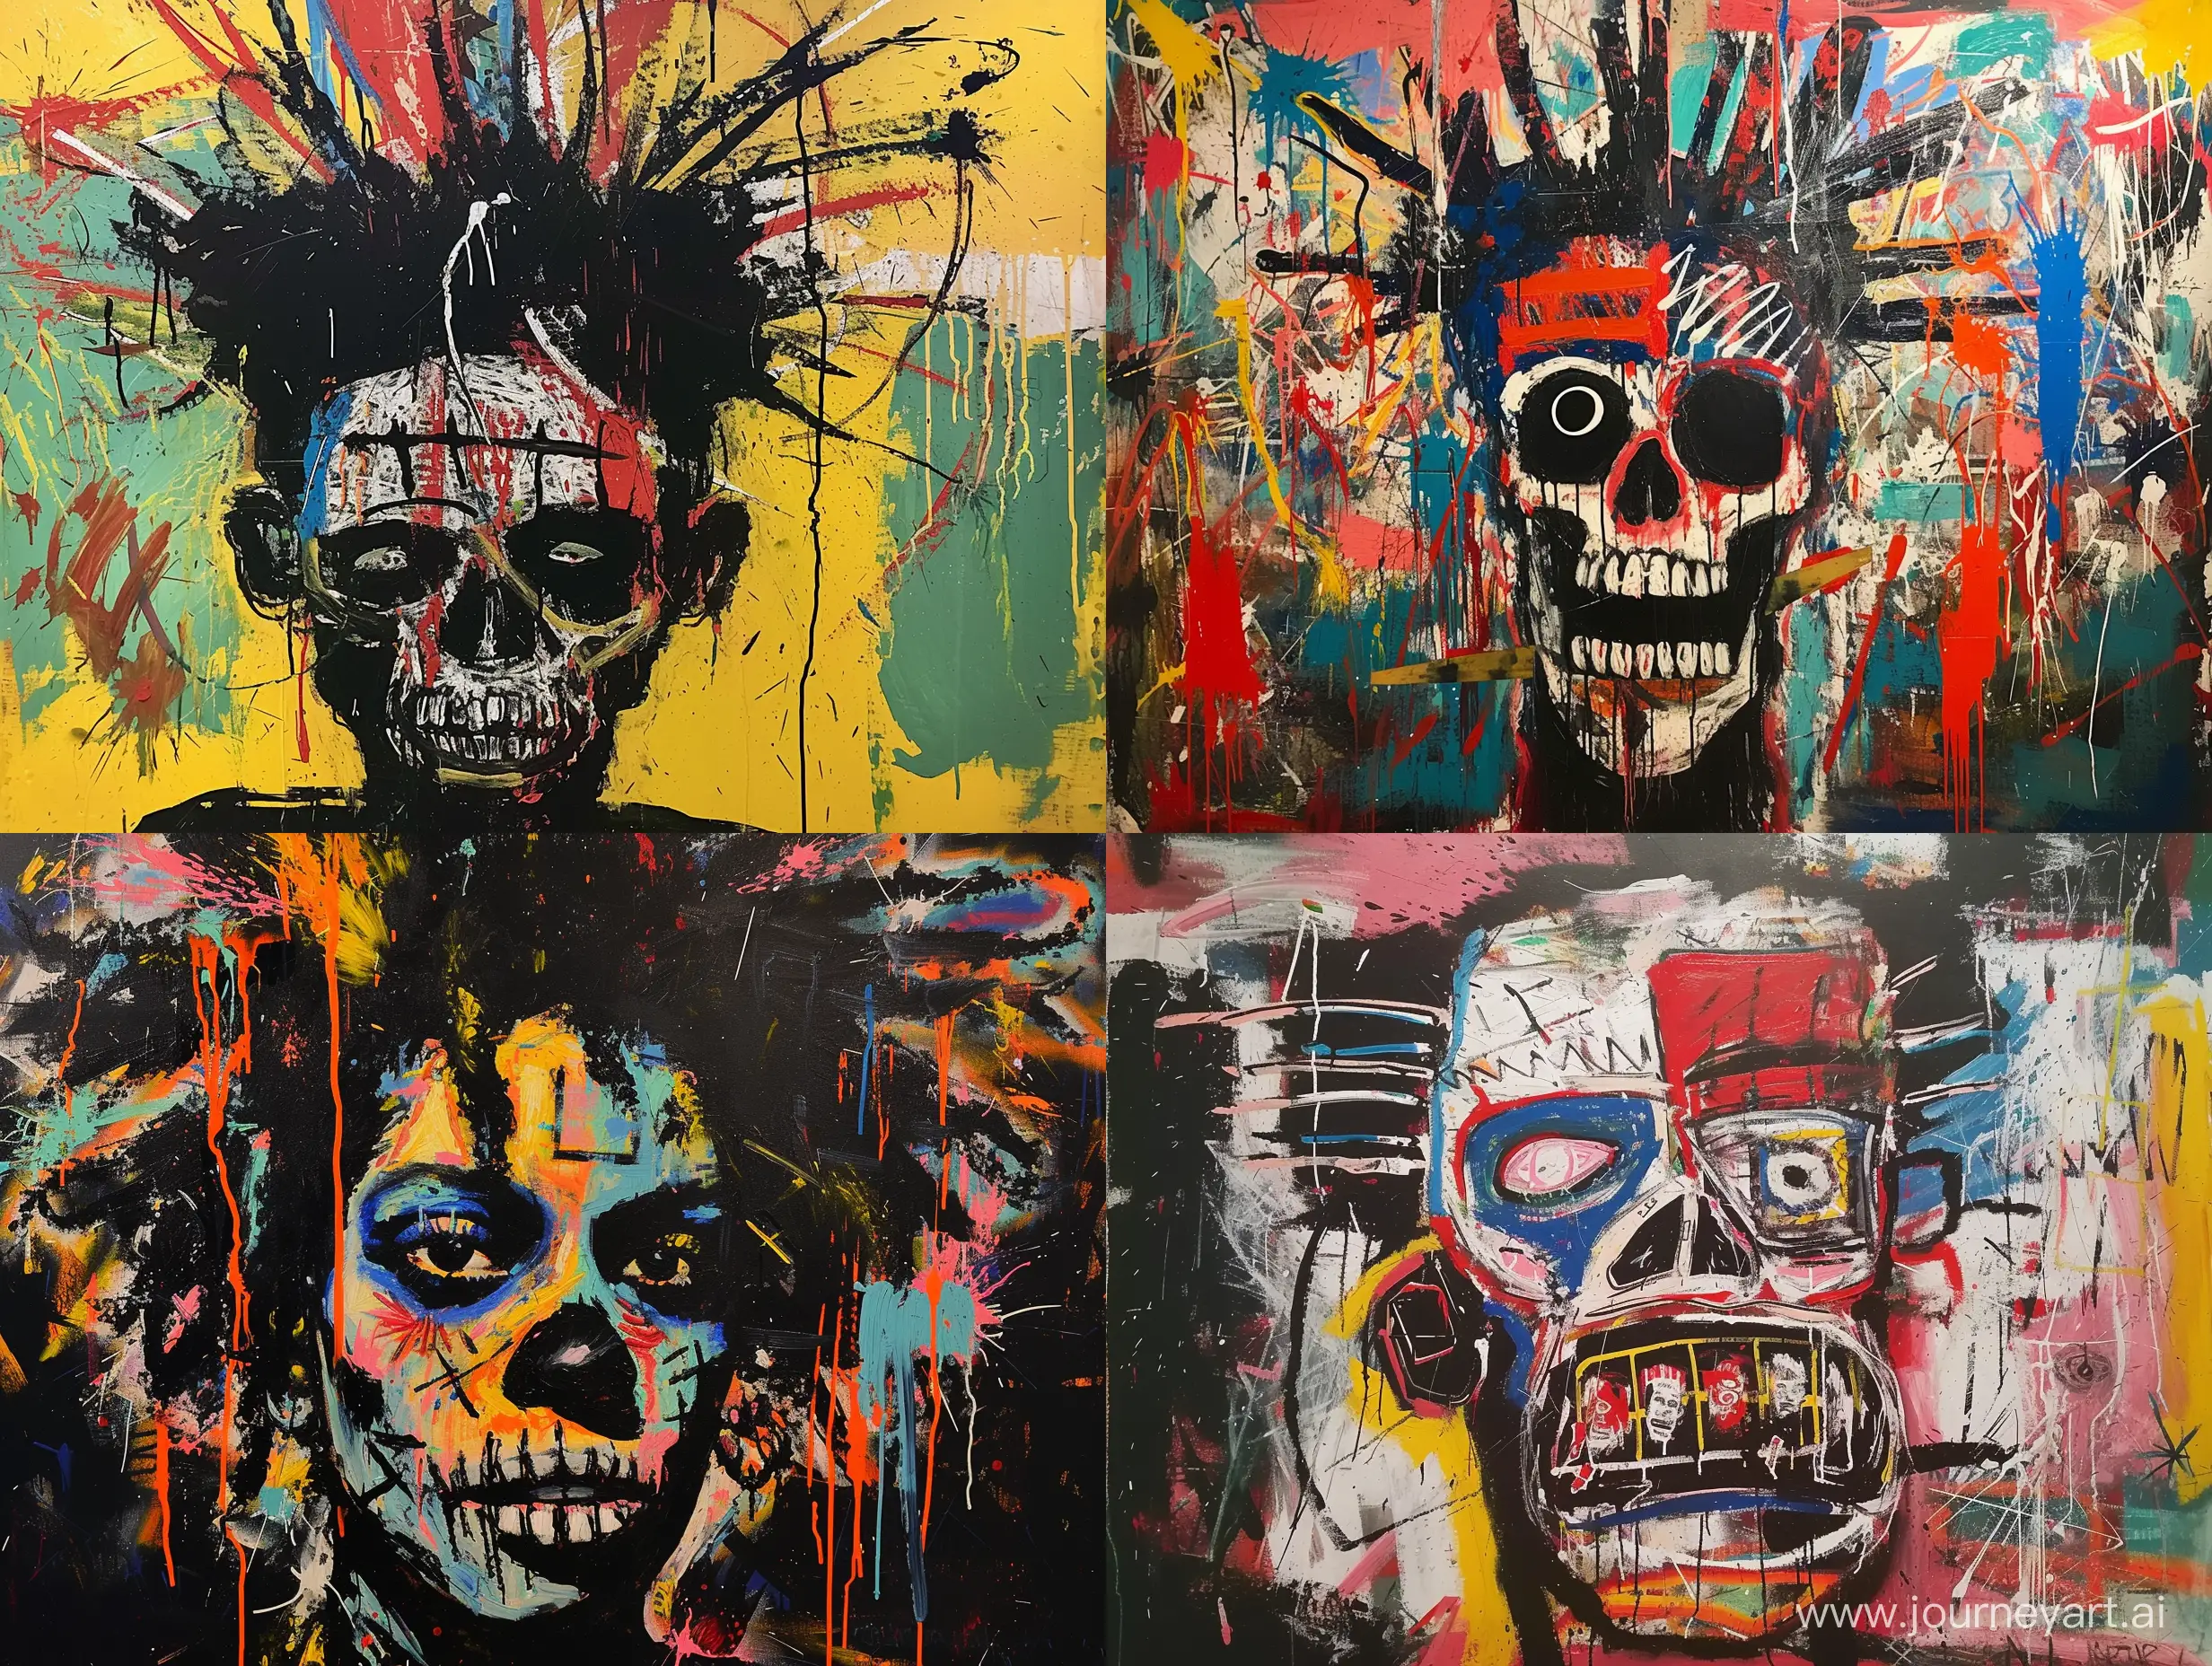 AwardWinning-Realistic-Voodoo-Painting-Inspired-by-JeanMichel-Basquiat